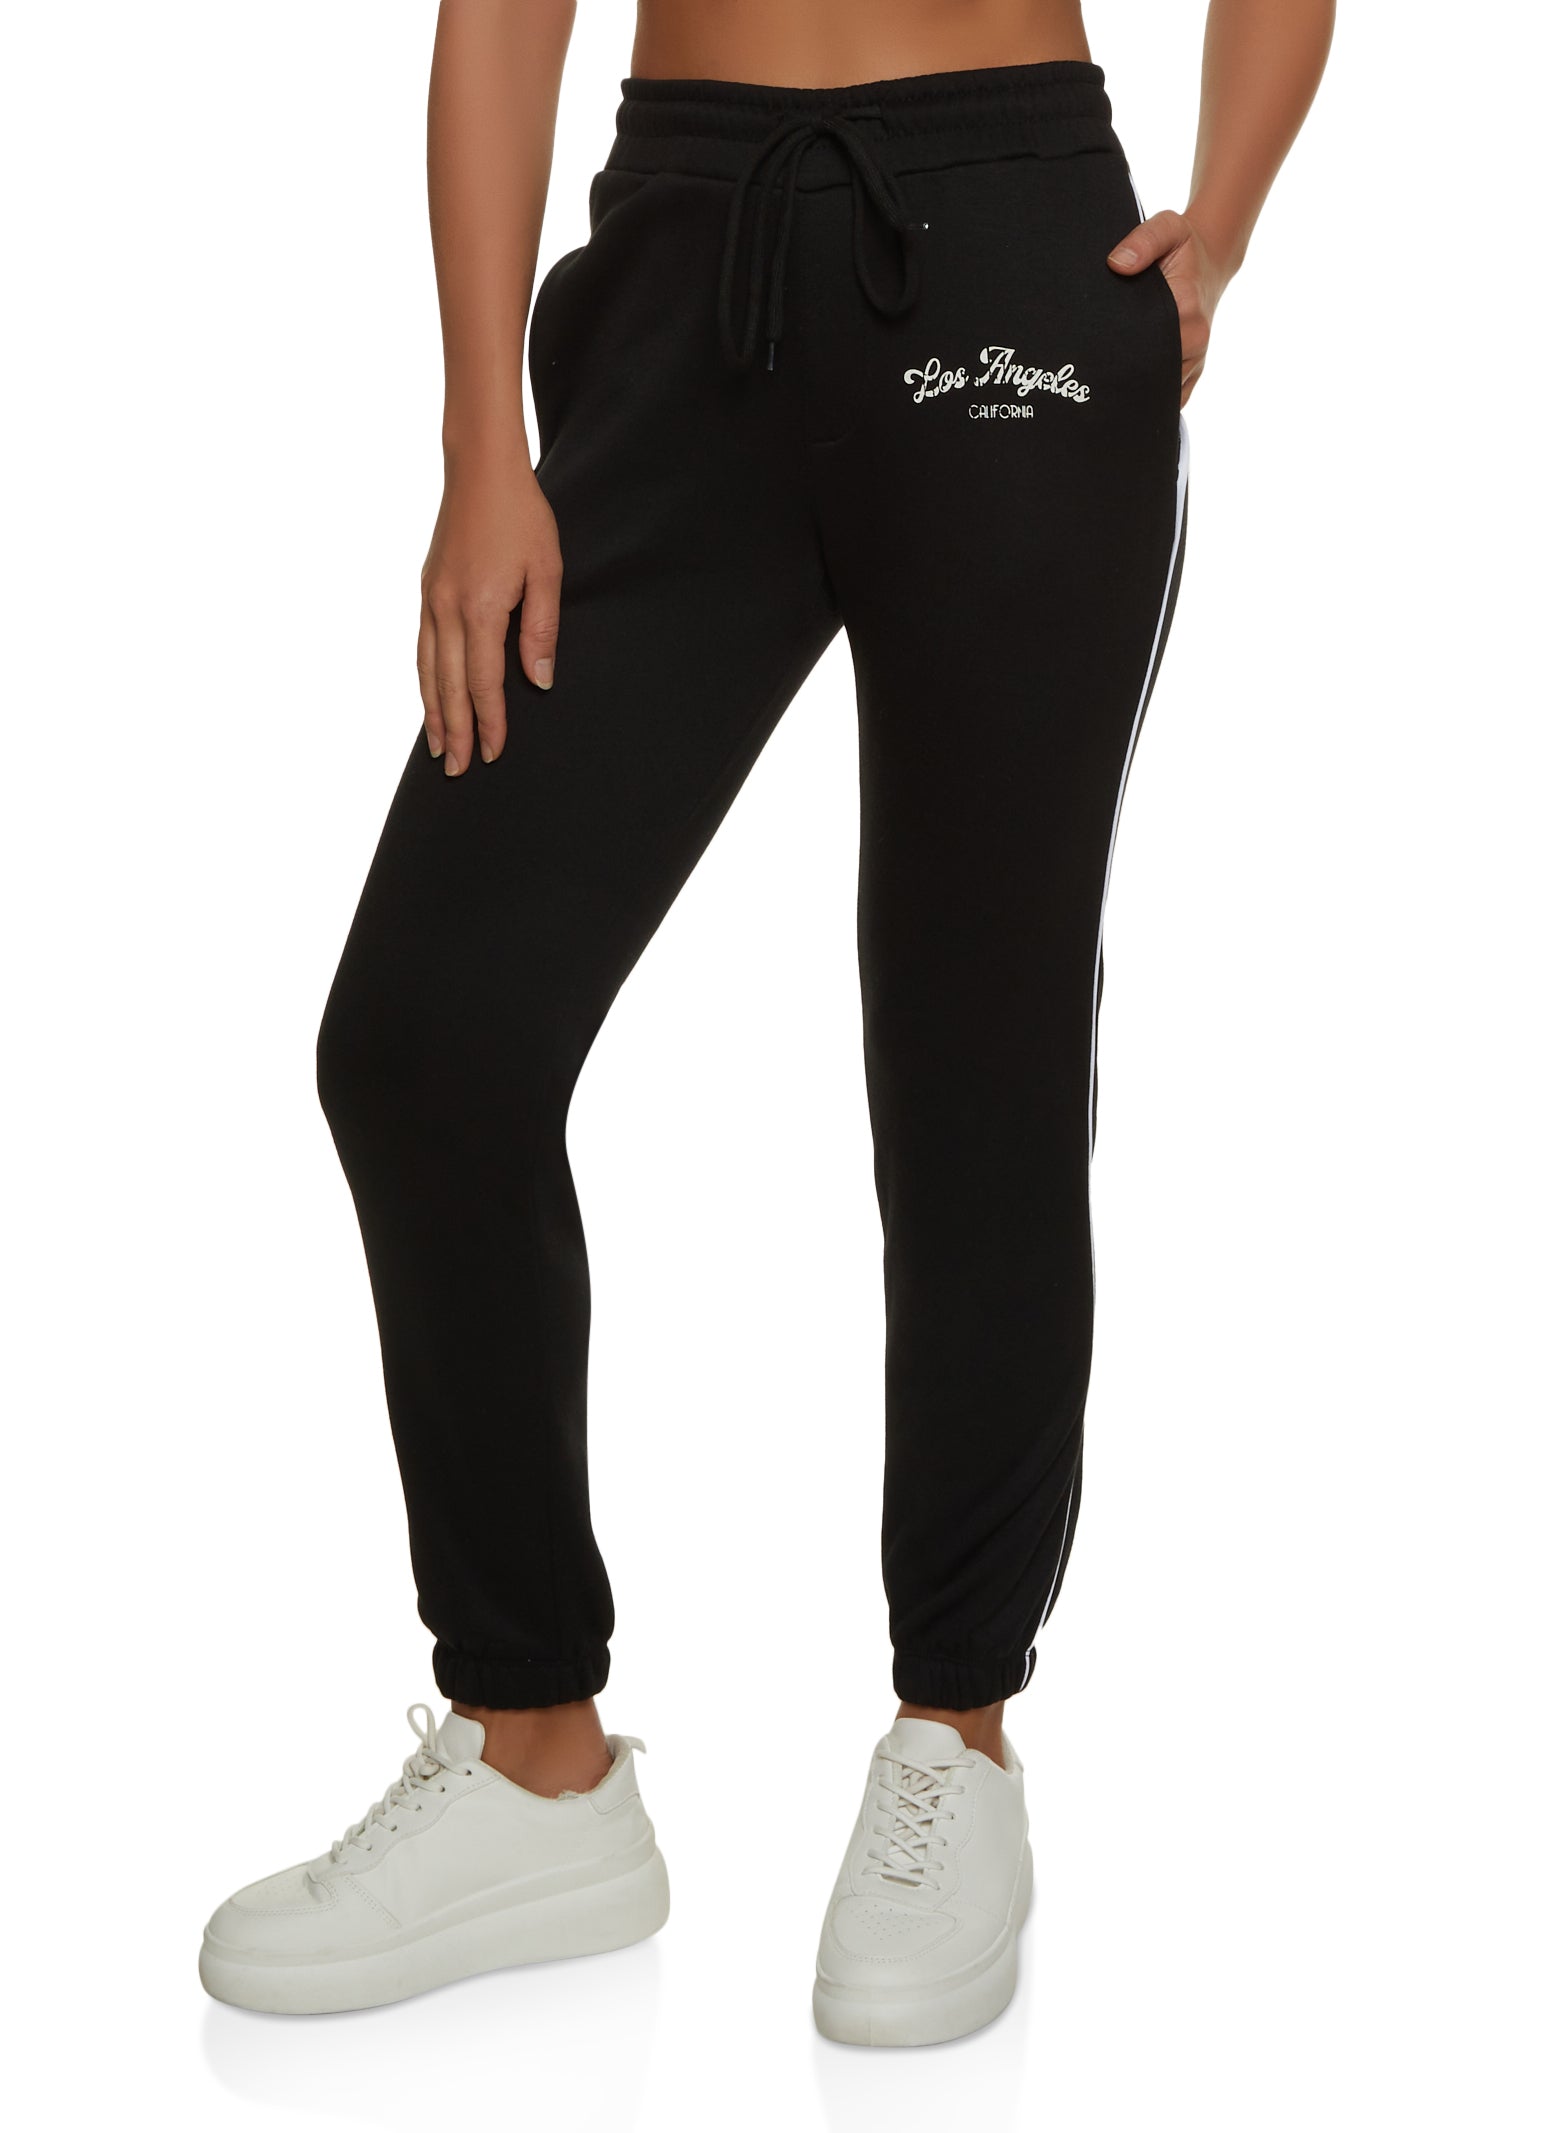 Rainbow Shops Womens Los Angeles California Sweatpants, Black, Size XL